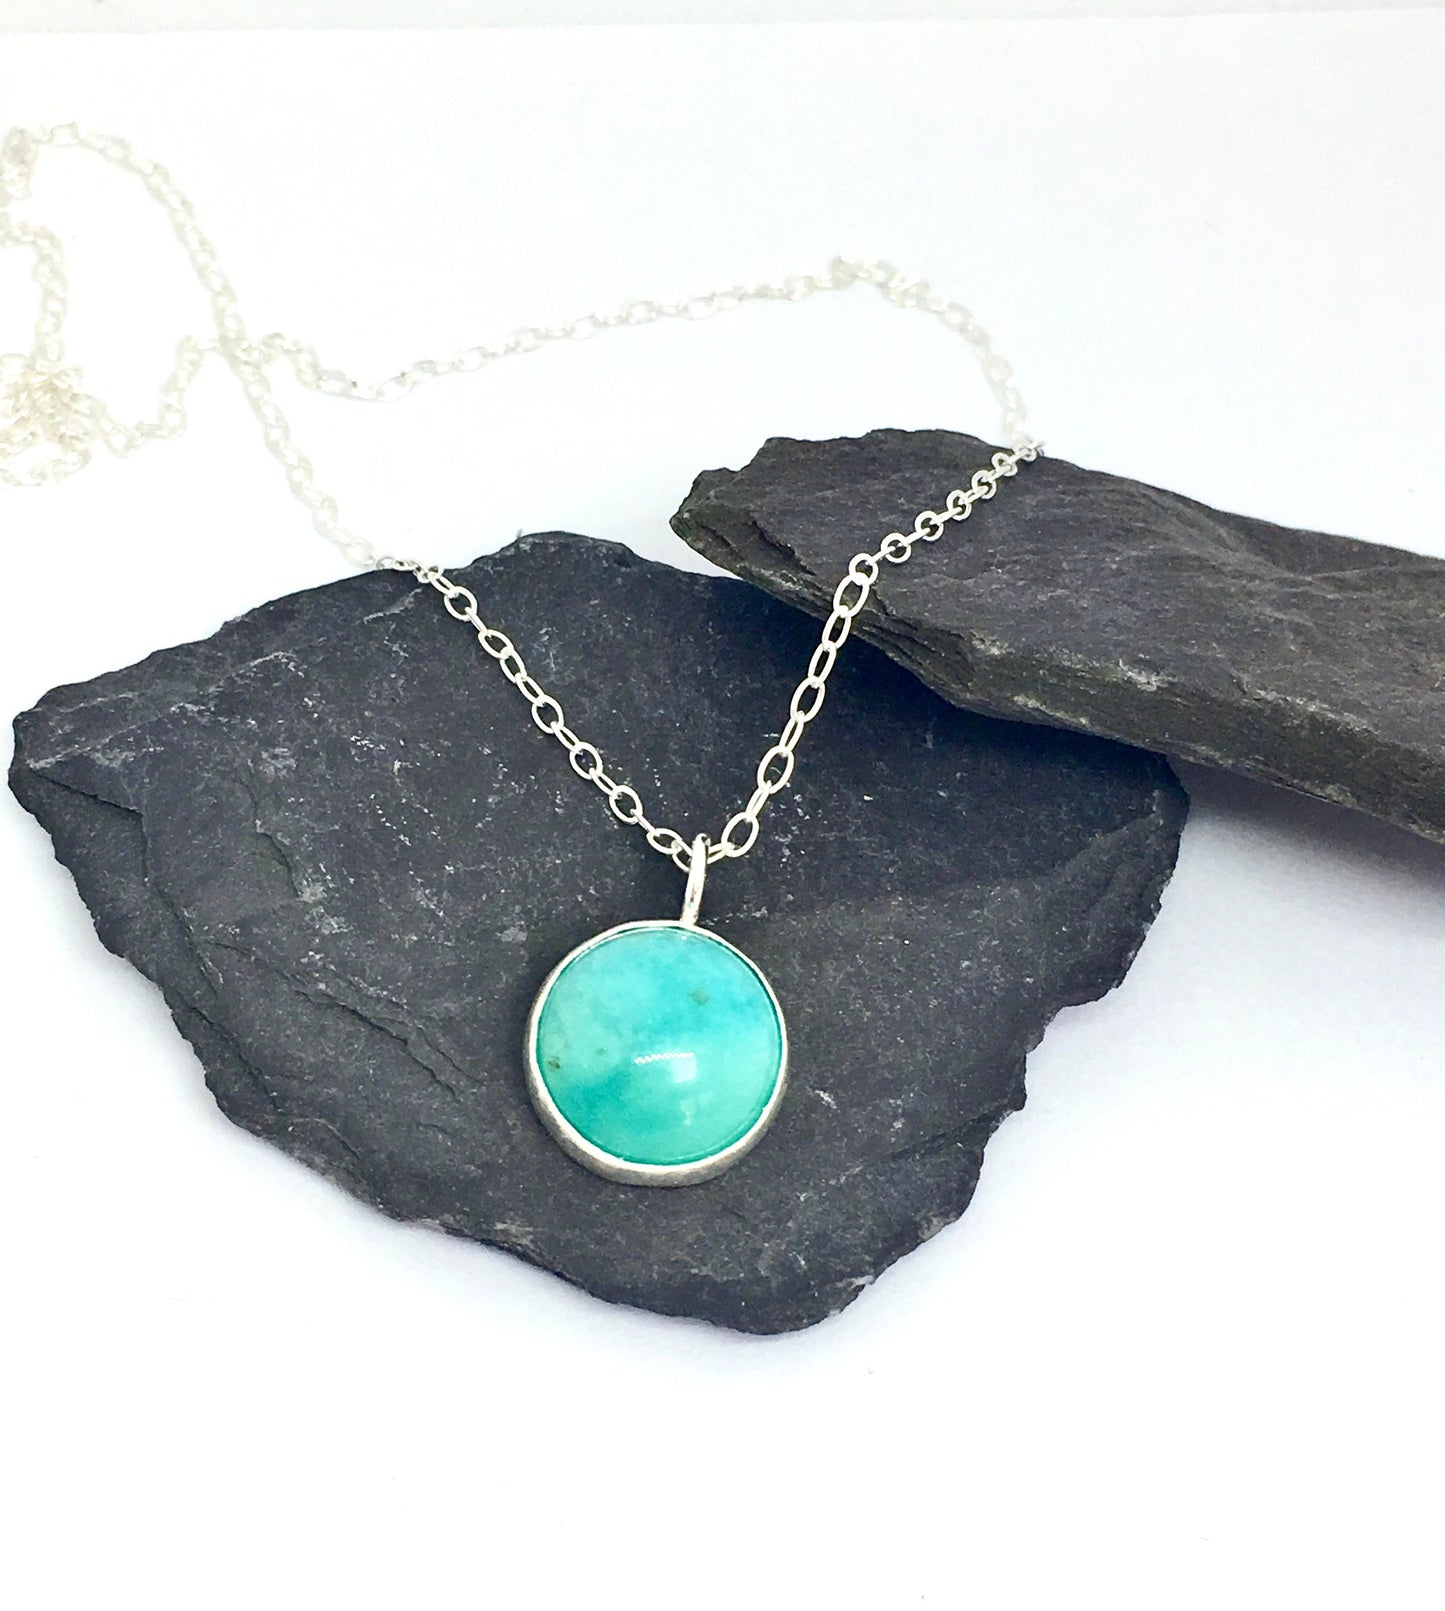 Aqua stone necklace